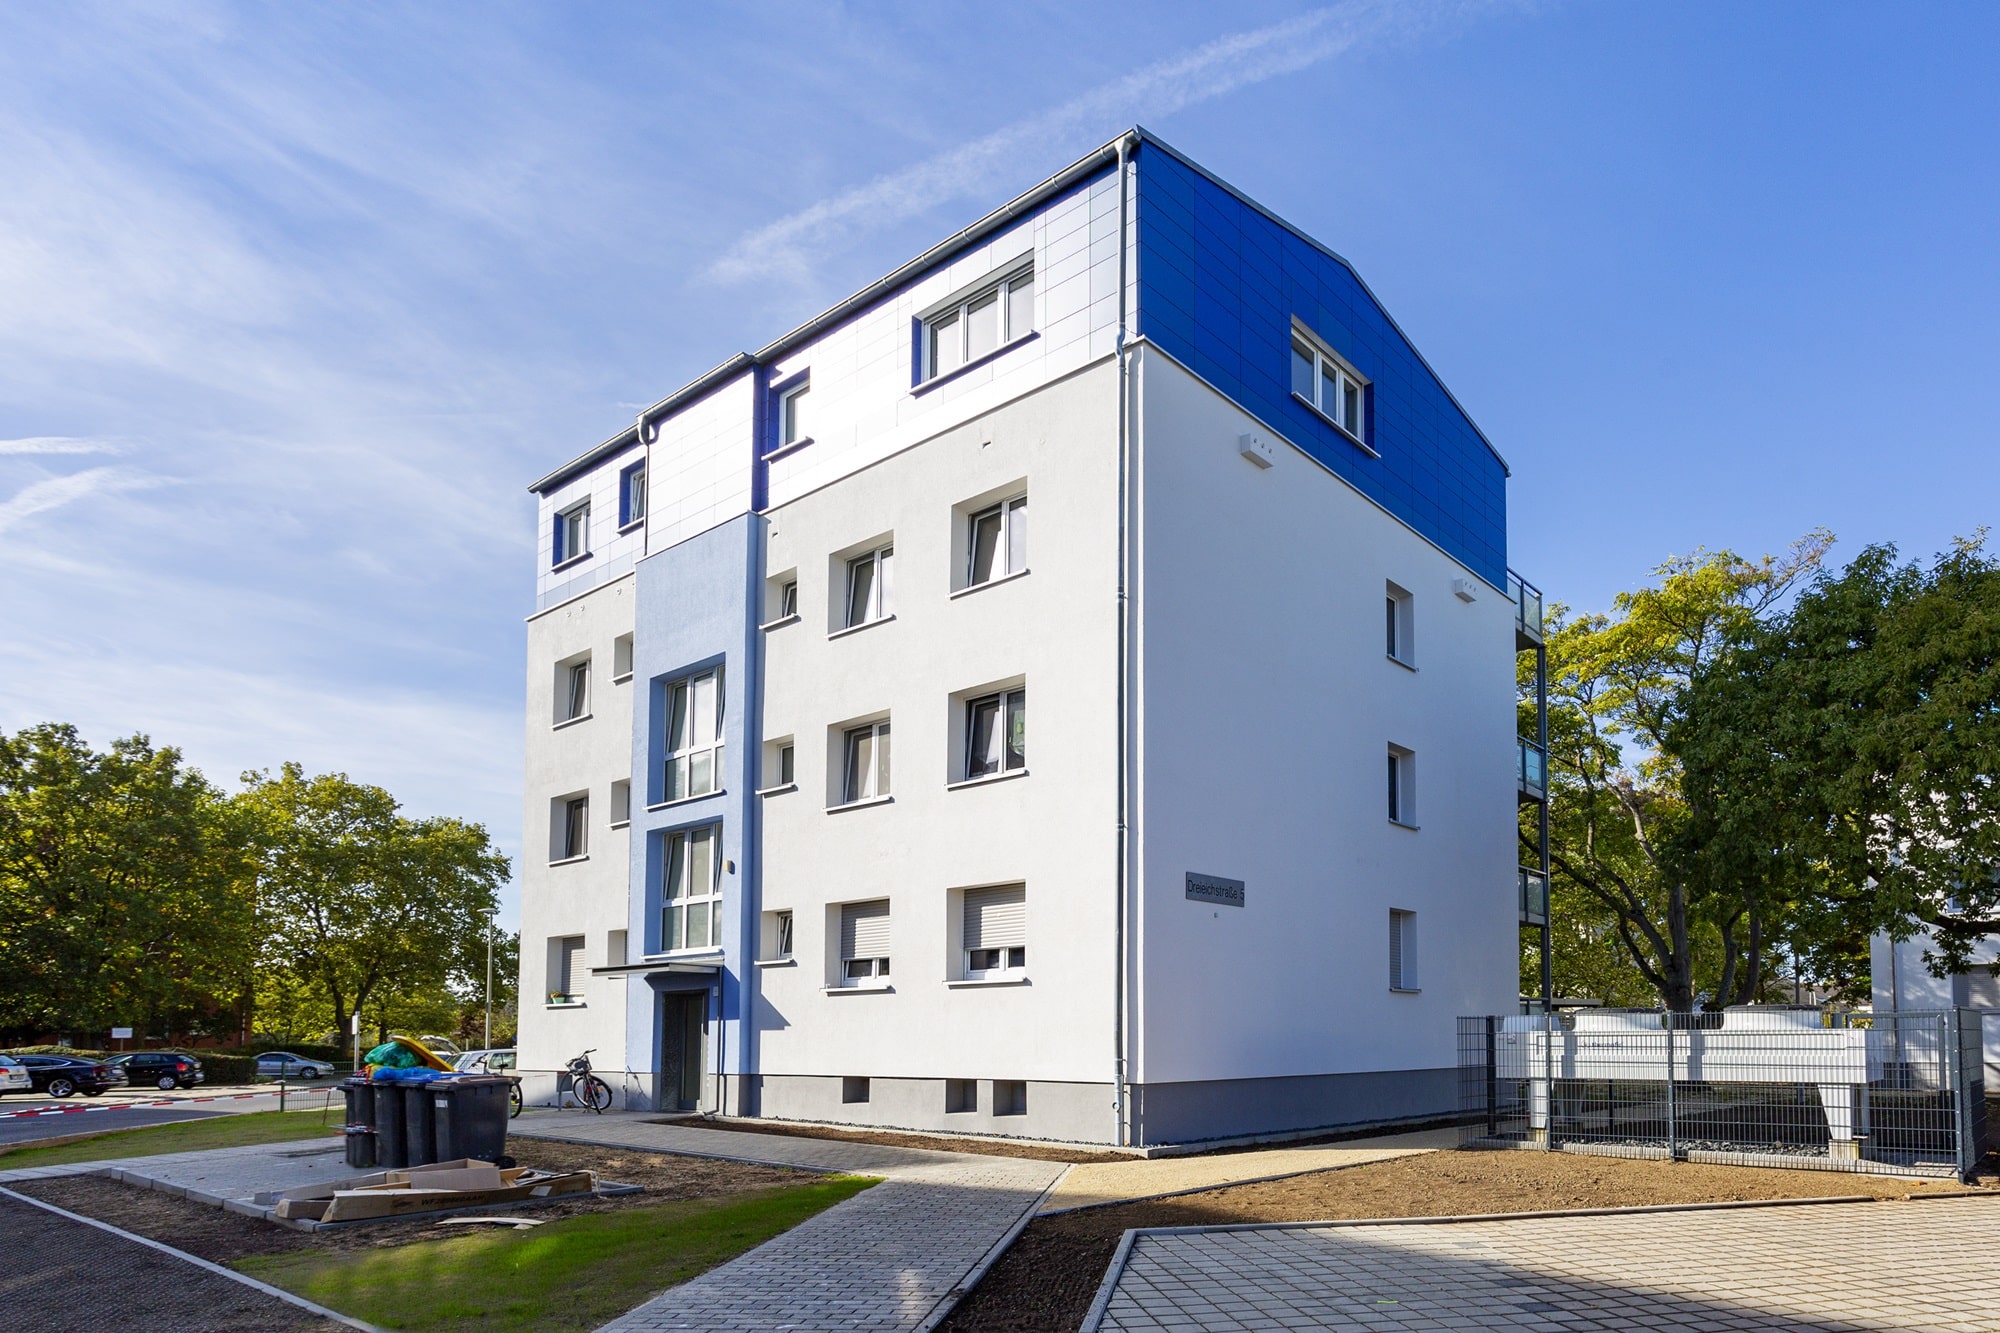 Recyclinghaus in Kelsterbach: Zirkulär statt linear